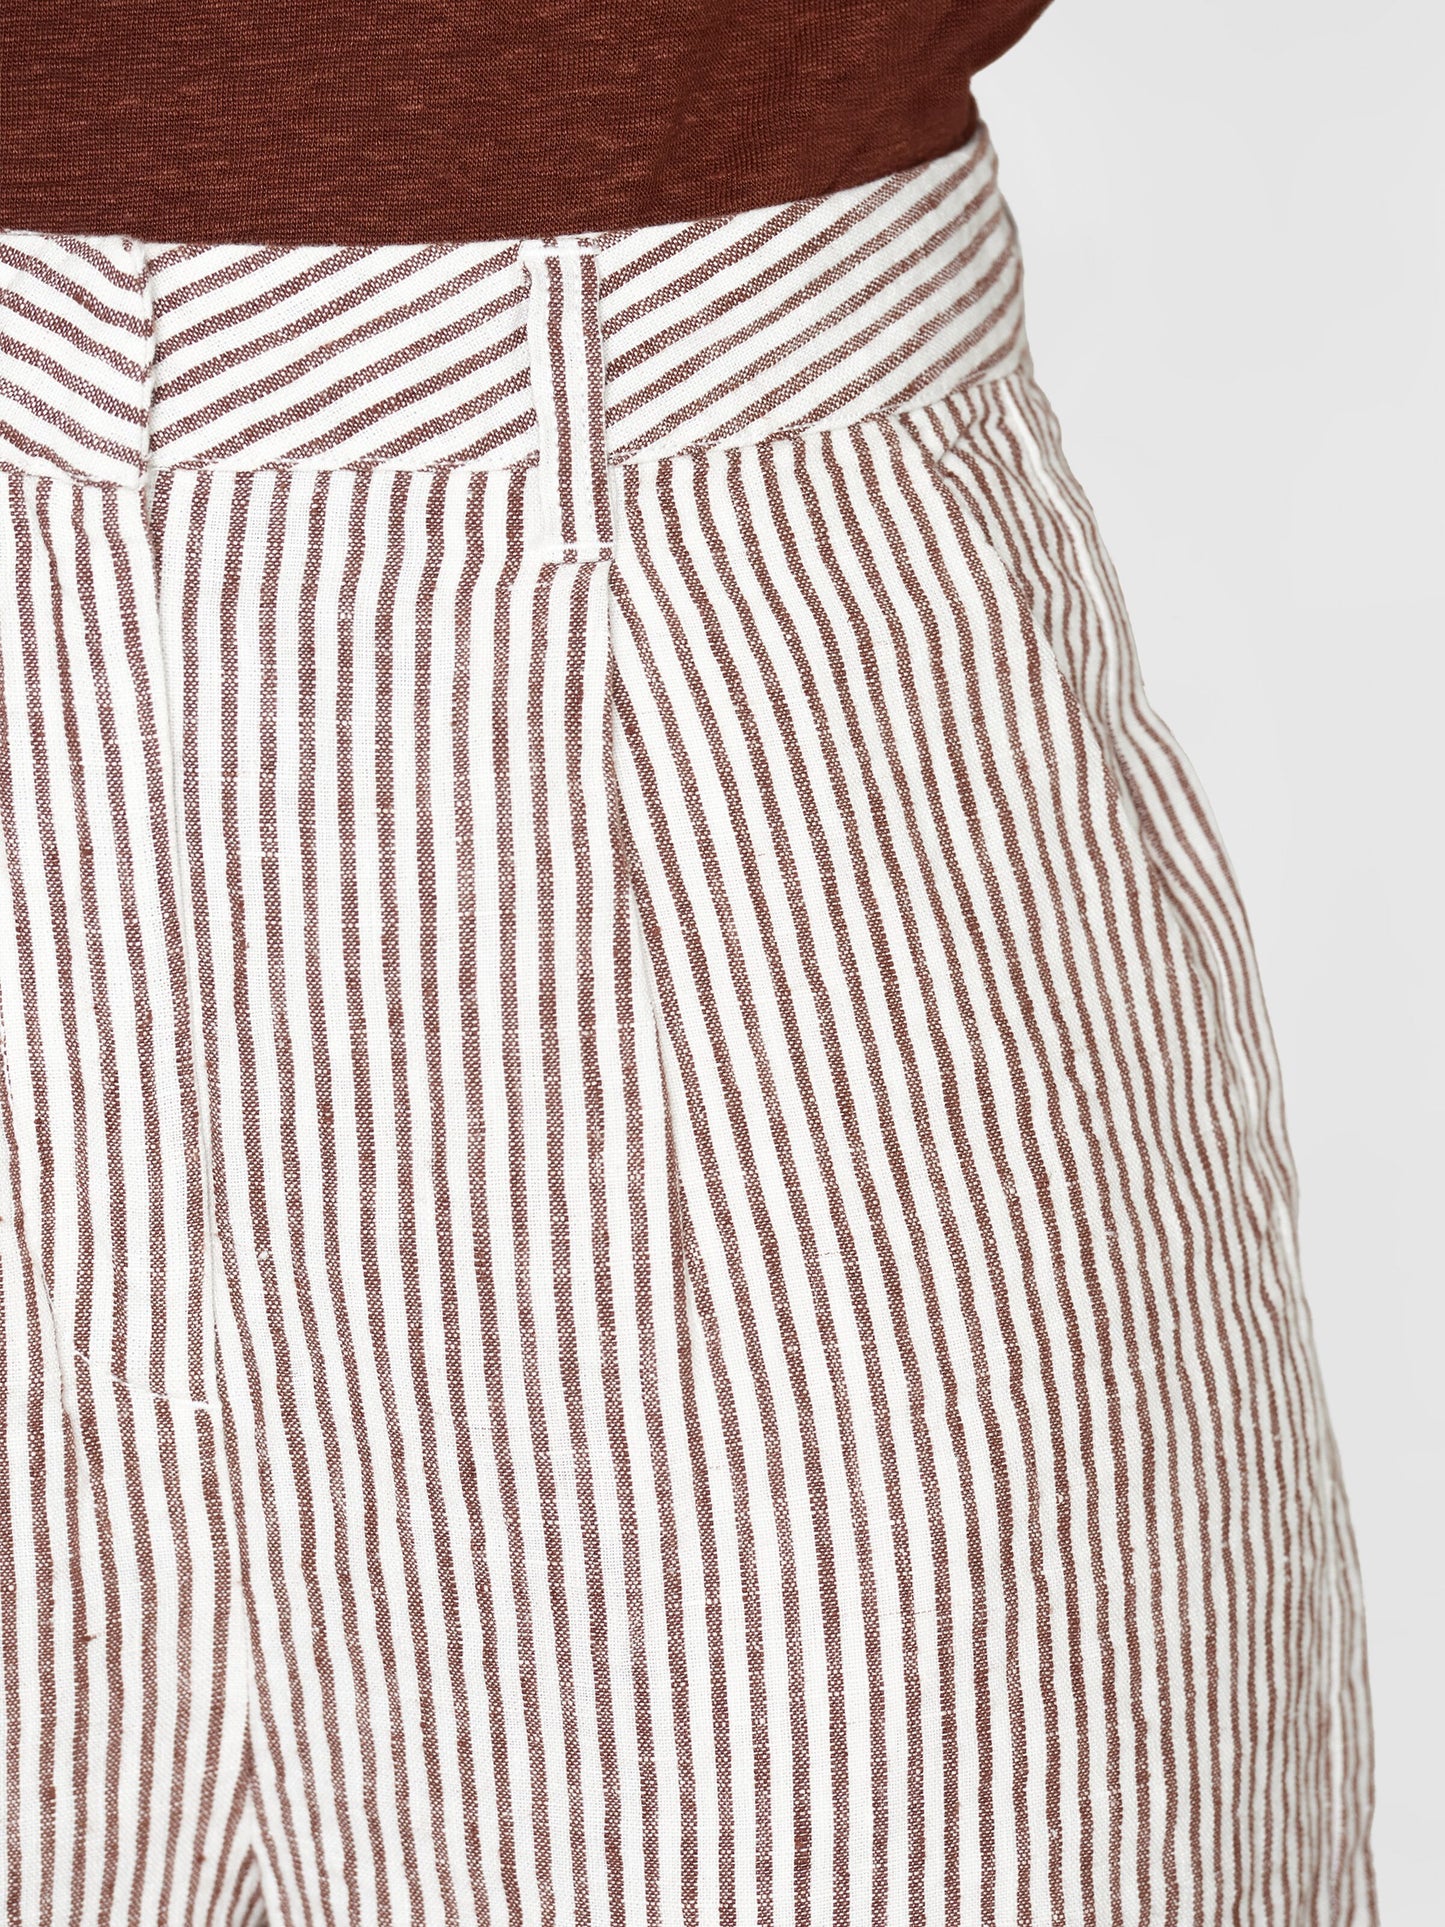 KCA - POSEY wide high-rise striped linen shorts Brown stripe